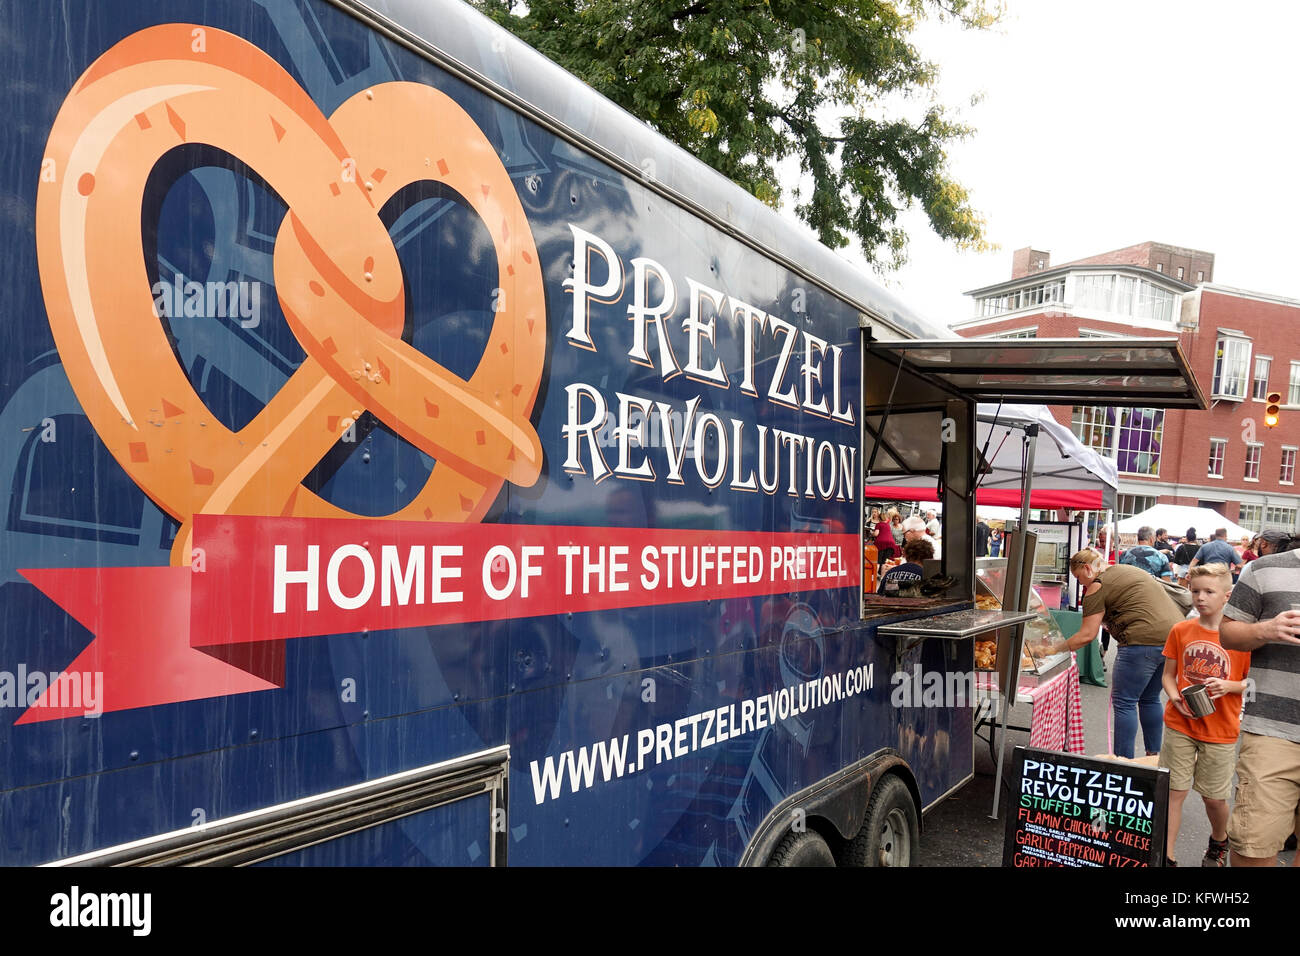 Pretzel revolution, Food truck selling Pretzels, Easton, Pennsylvania, United states. Stock Photo